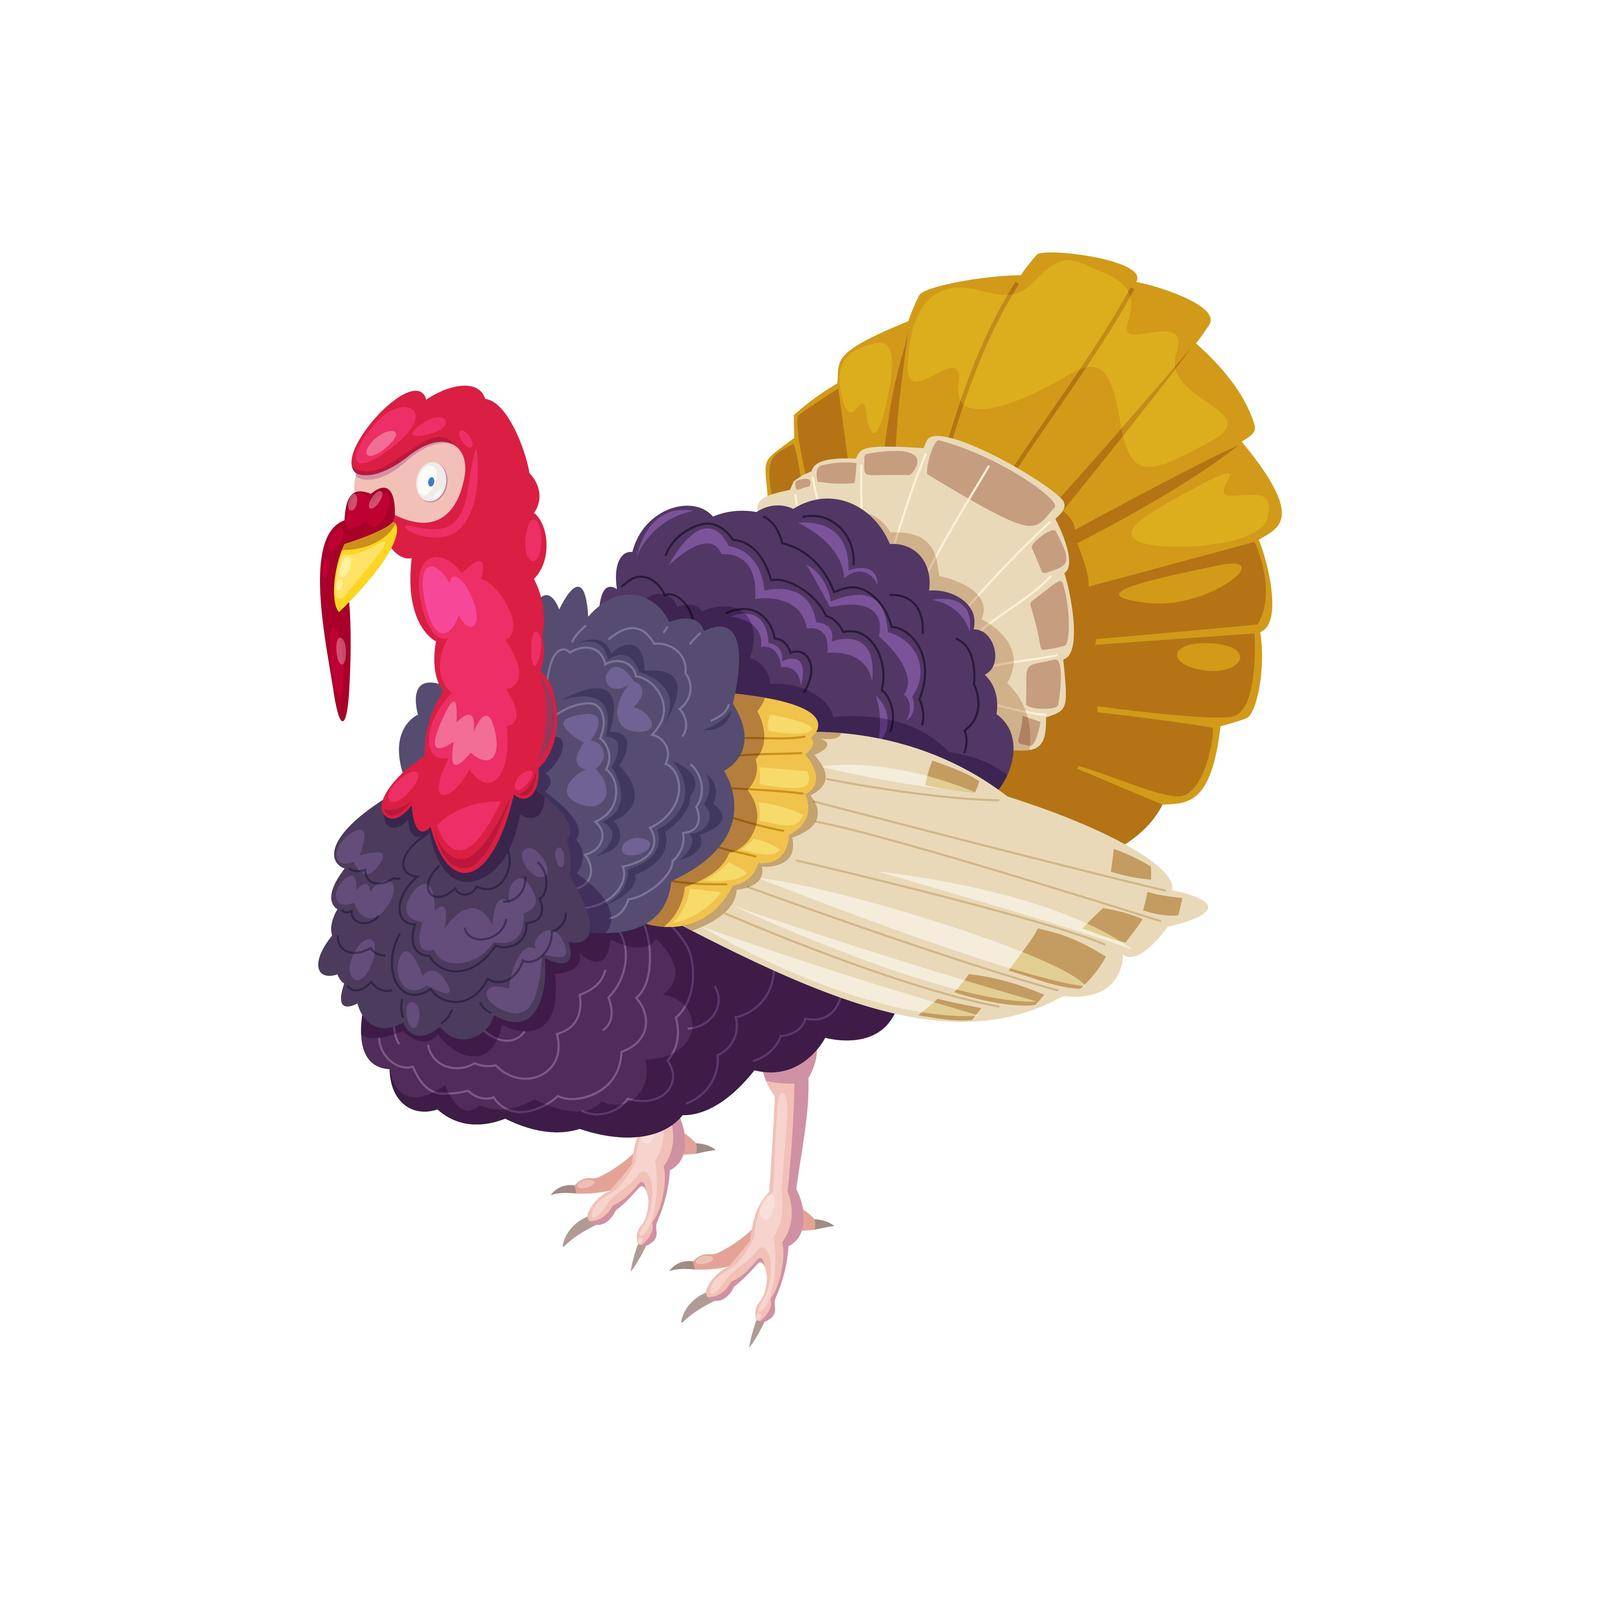 Turkey in cartoon style isolated on white background.